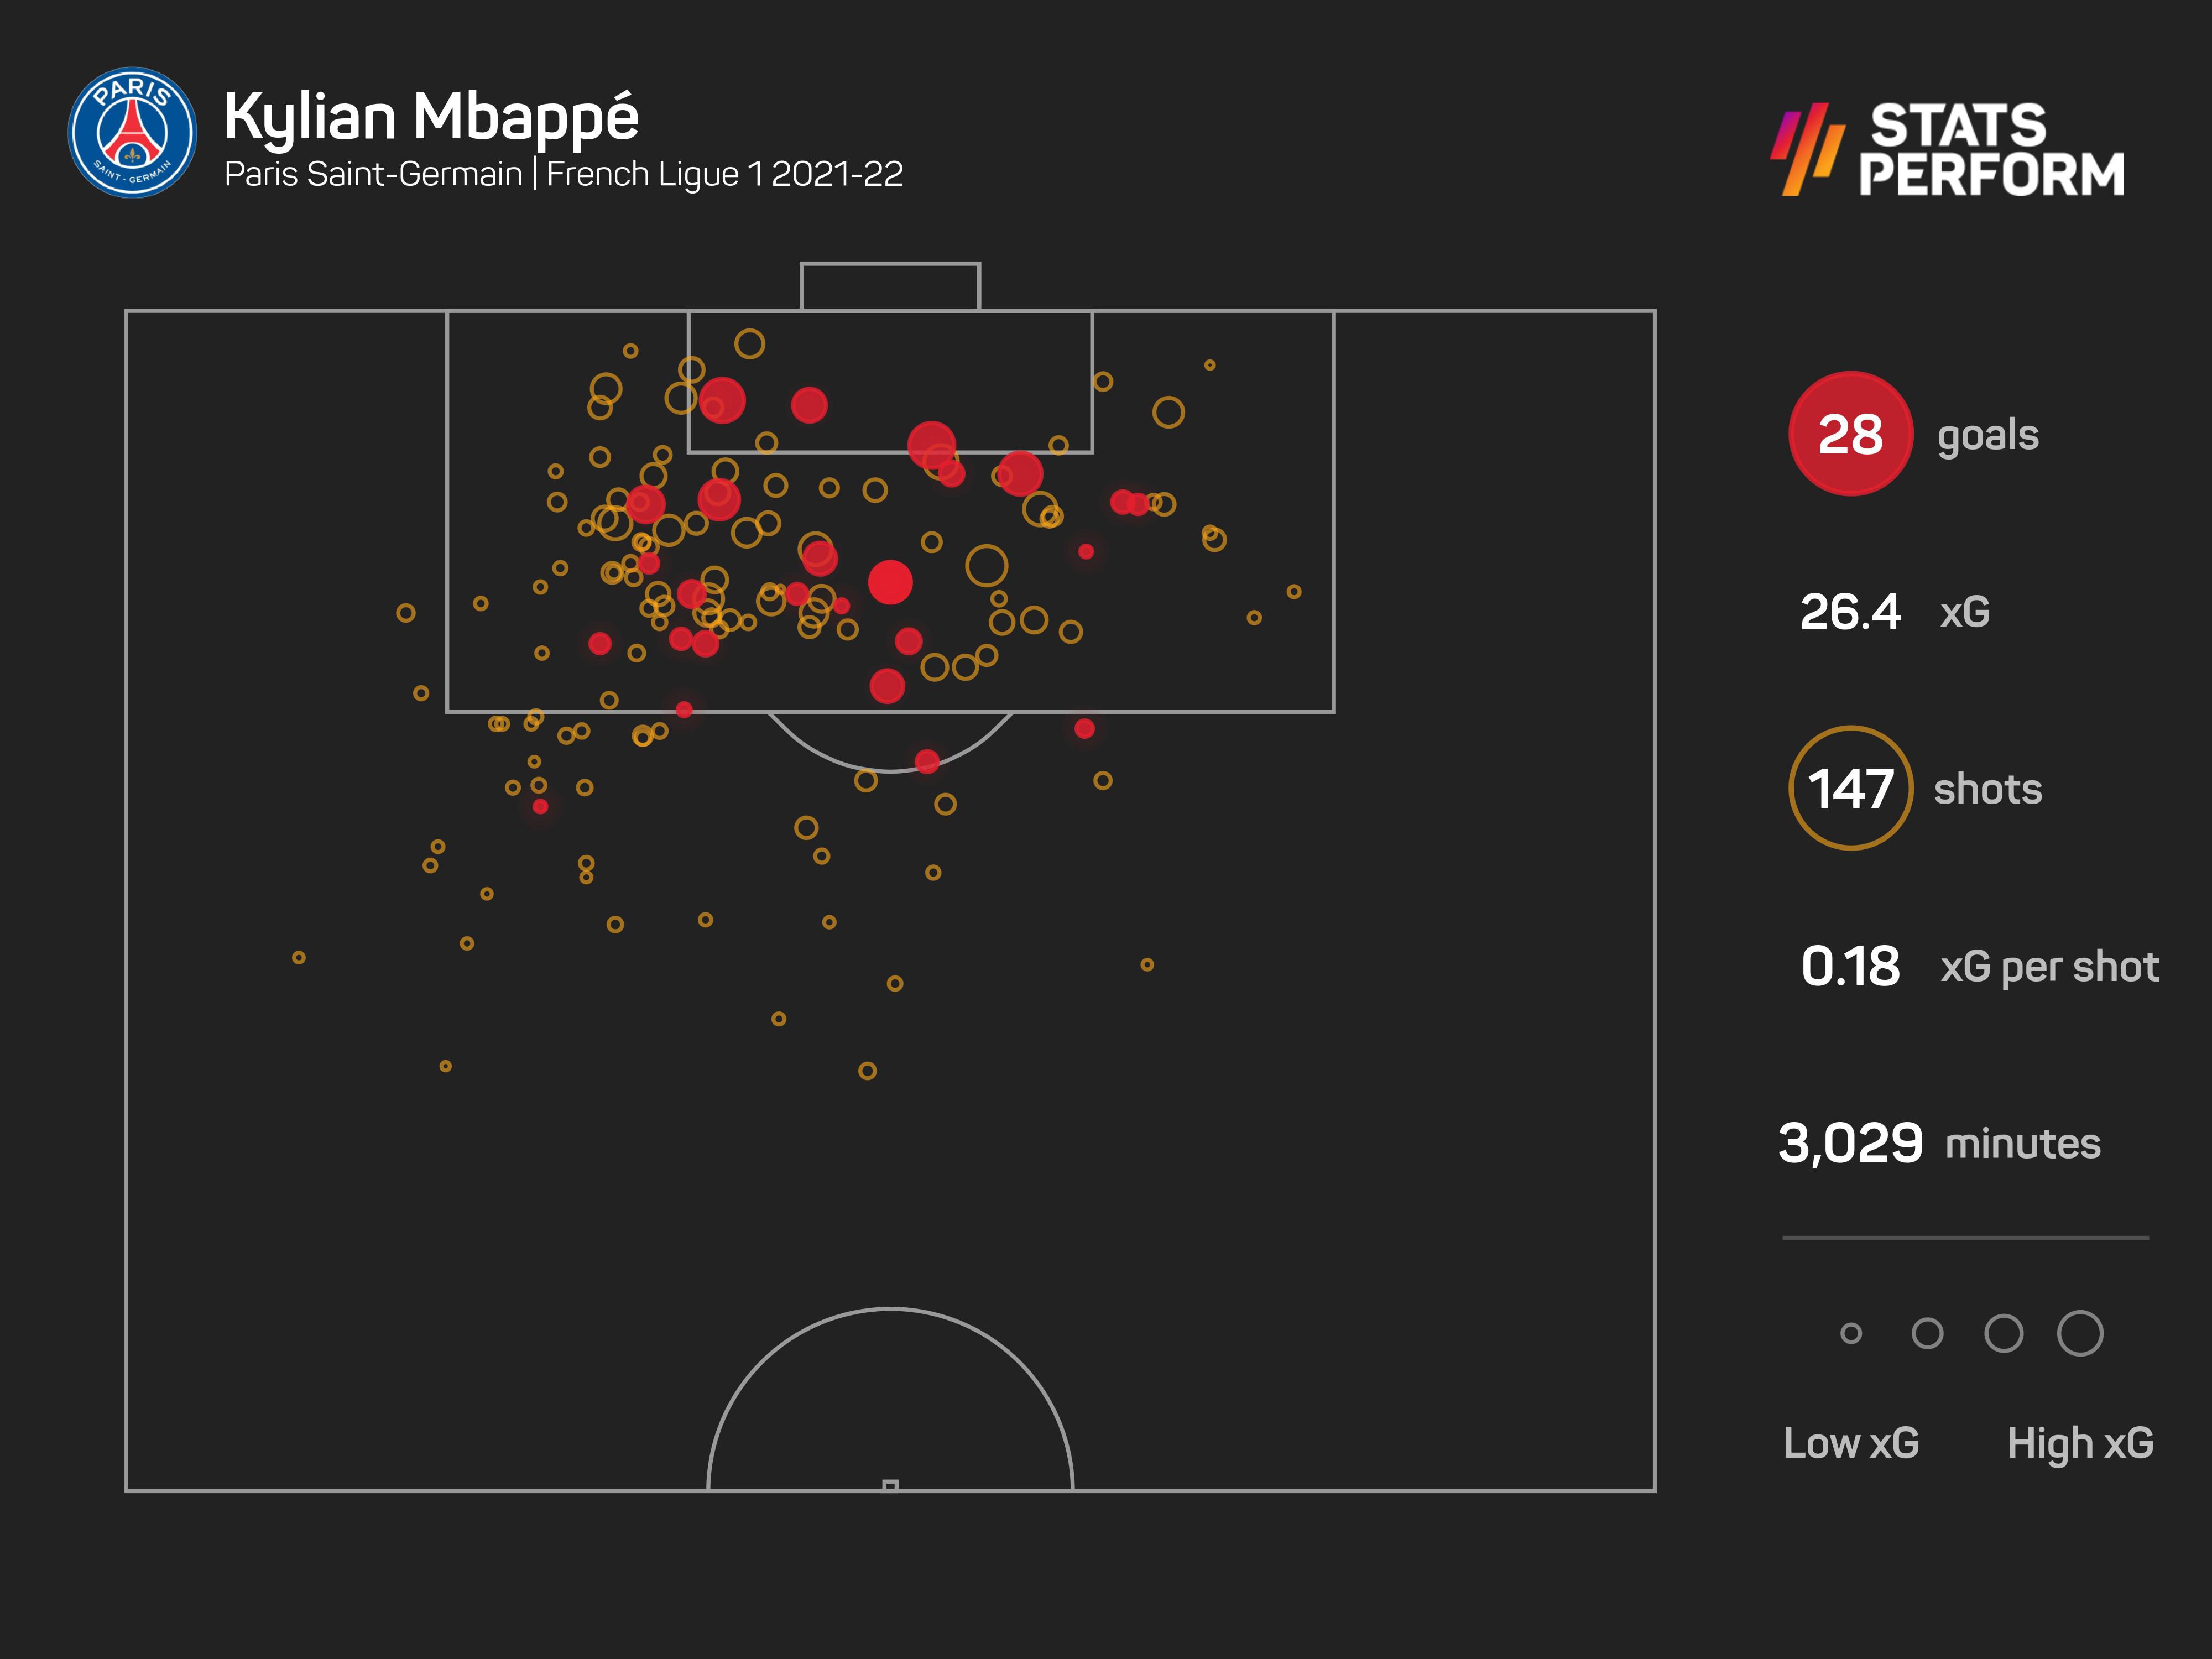 Kylian Mbappe was PSG's standout performer last season